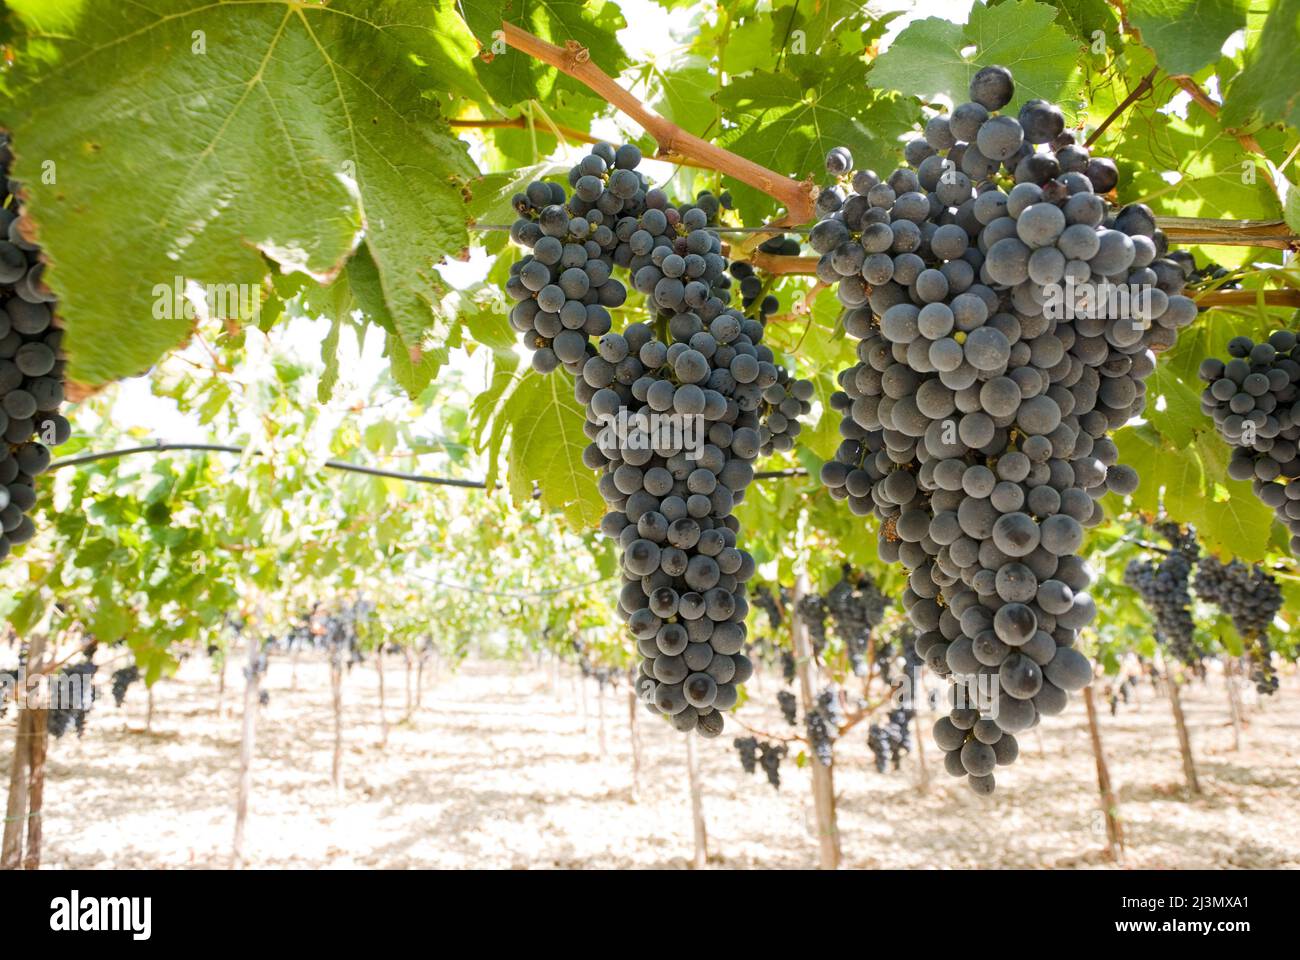 grapes of black vine ripe Stock Photo